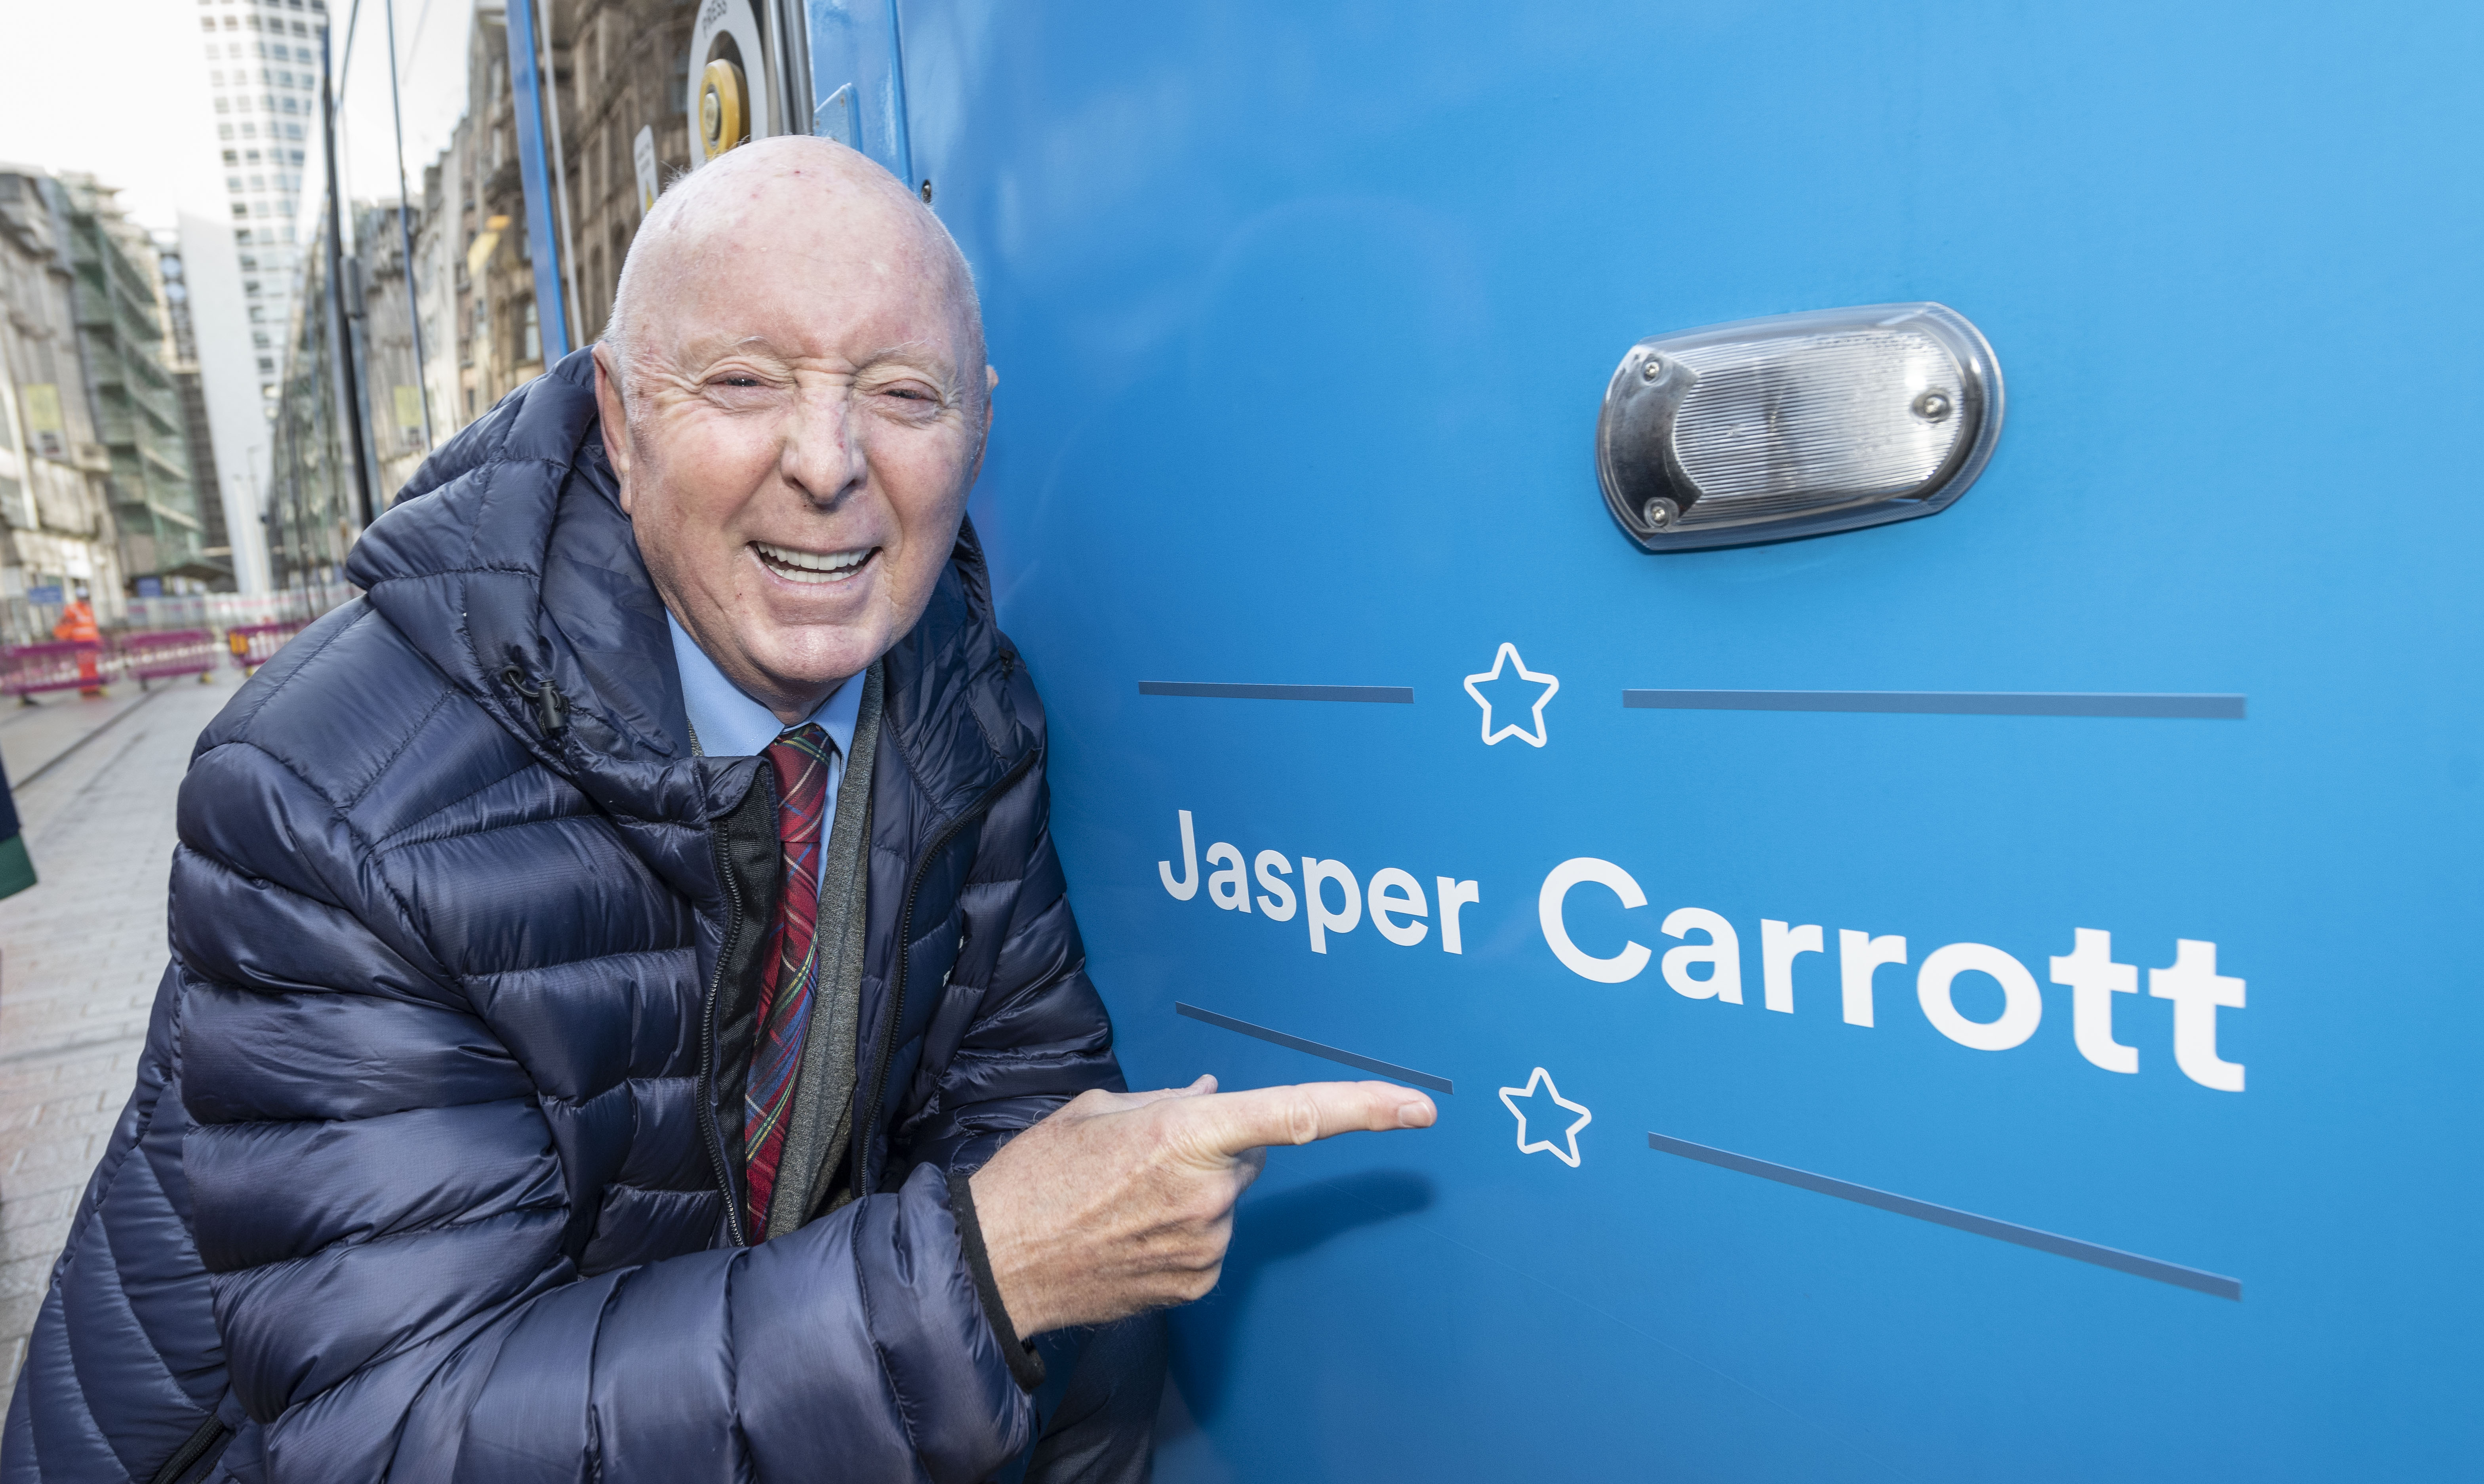 Jasper Carrott unveils tram named in his honour